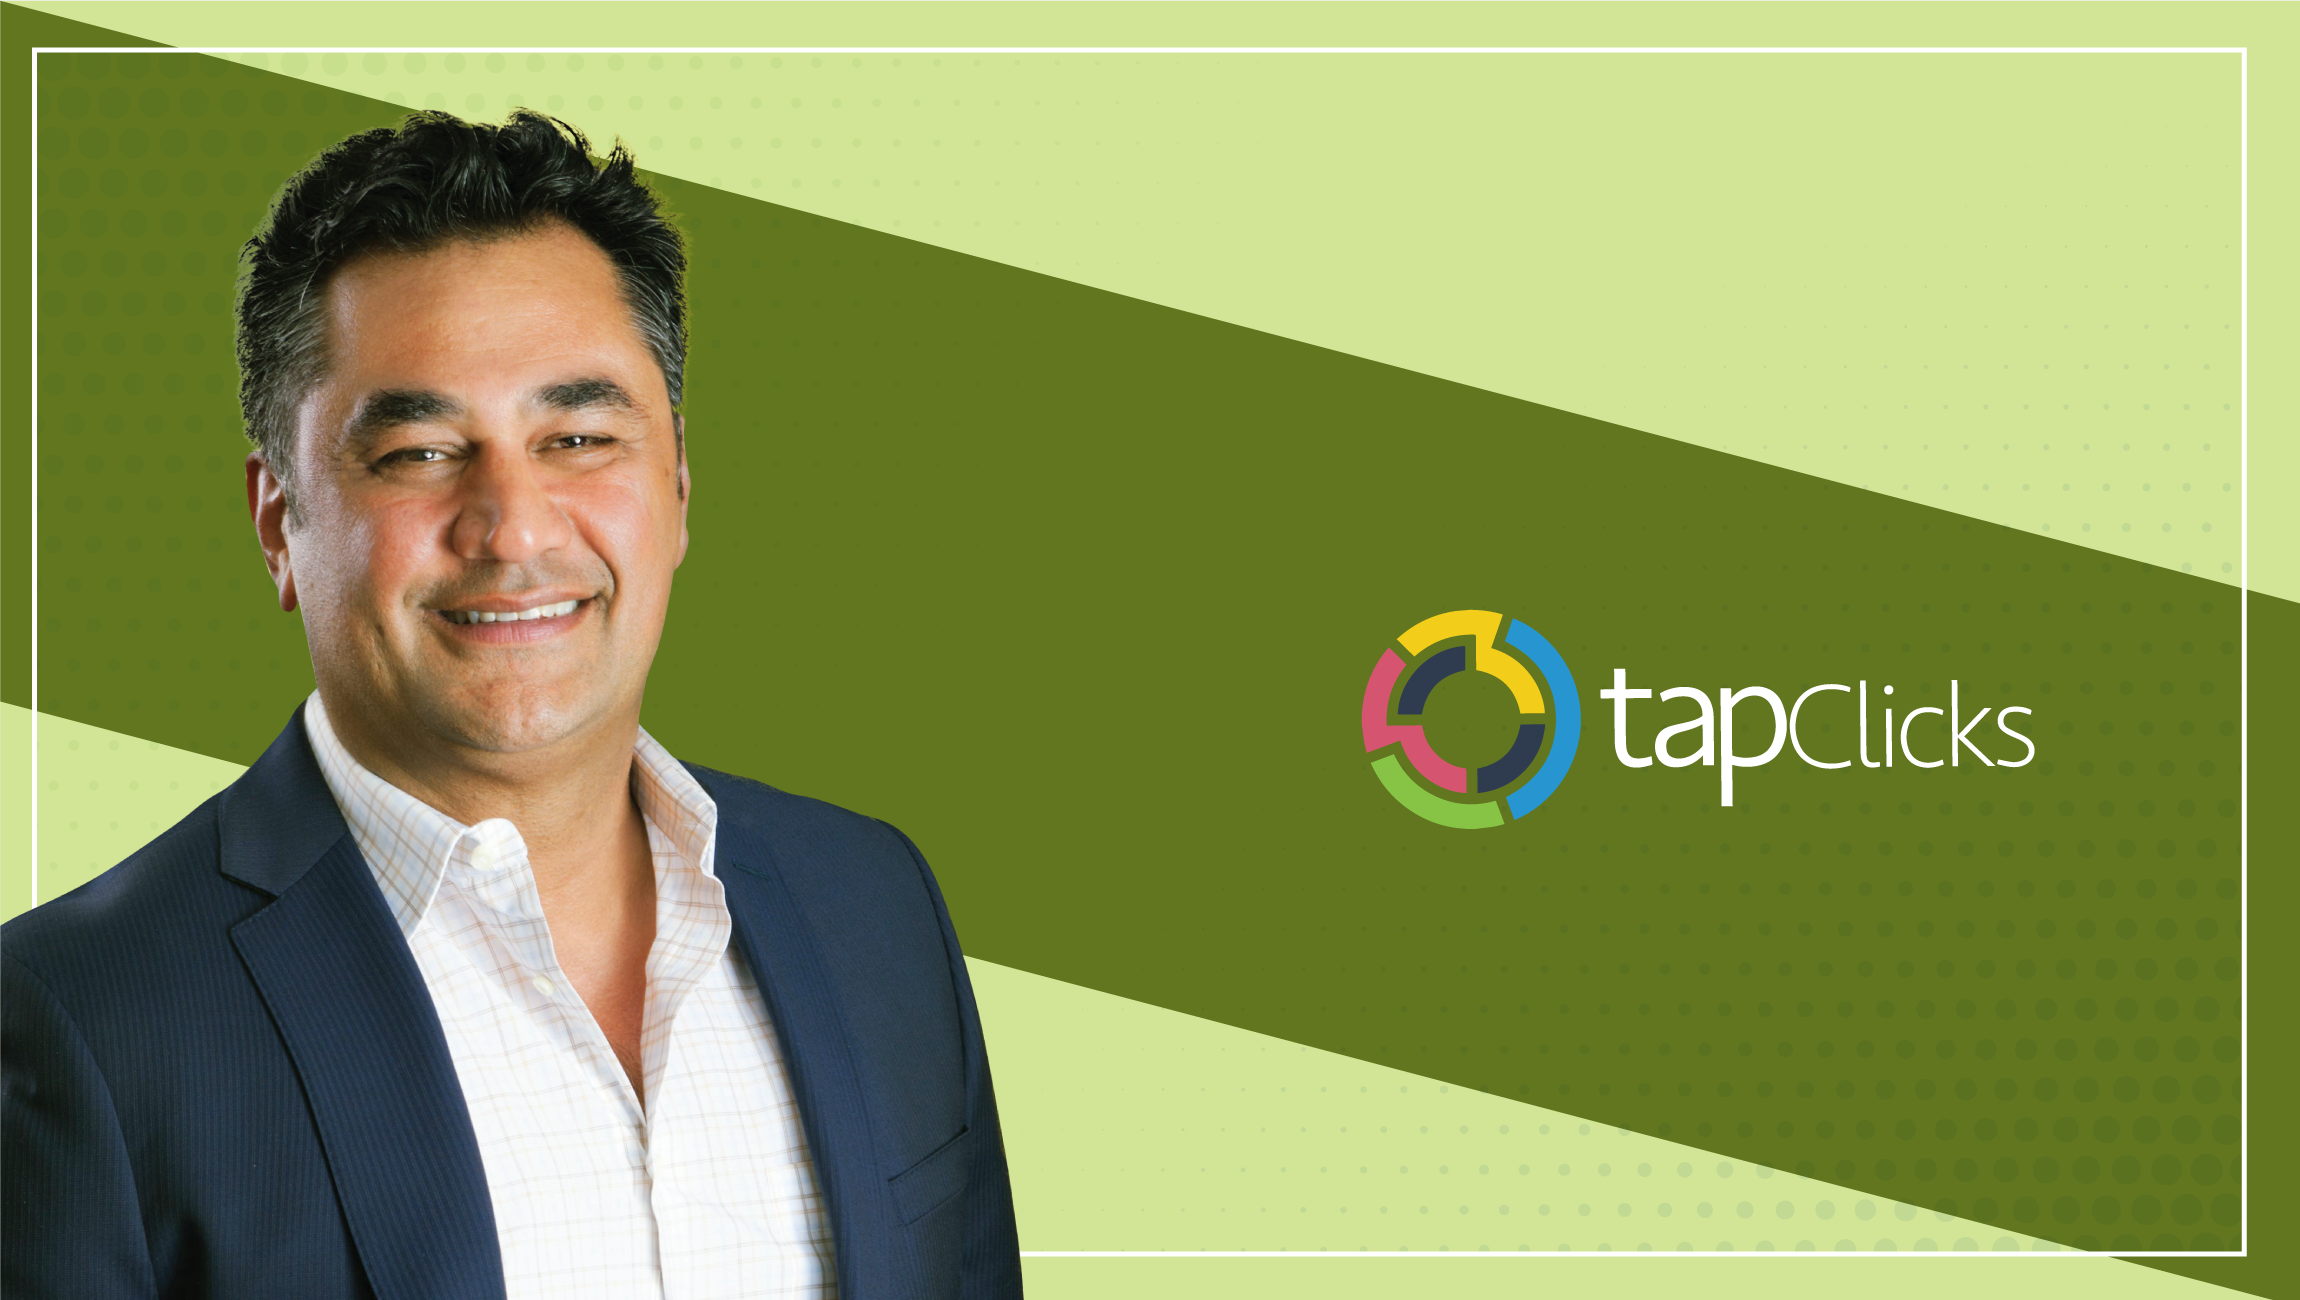 TapClicks’ CEO Babak Hedayati leads innovative marketing